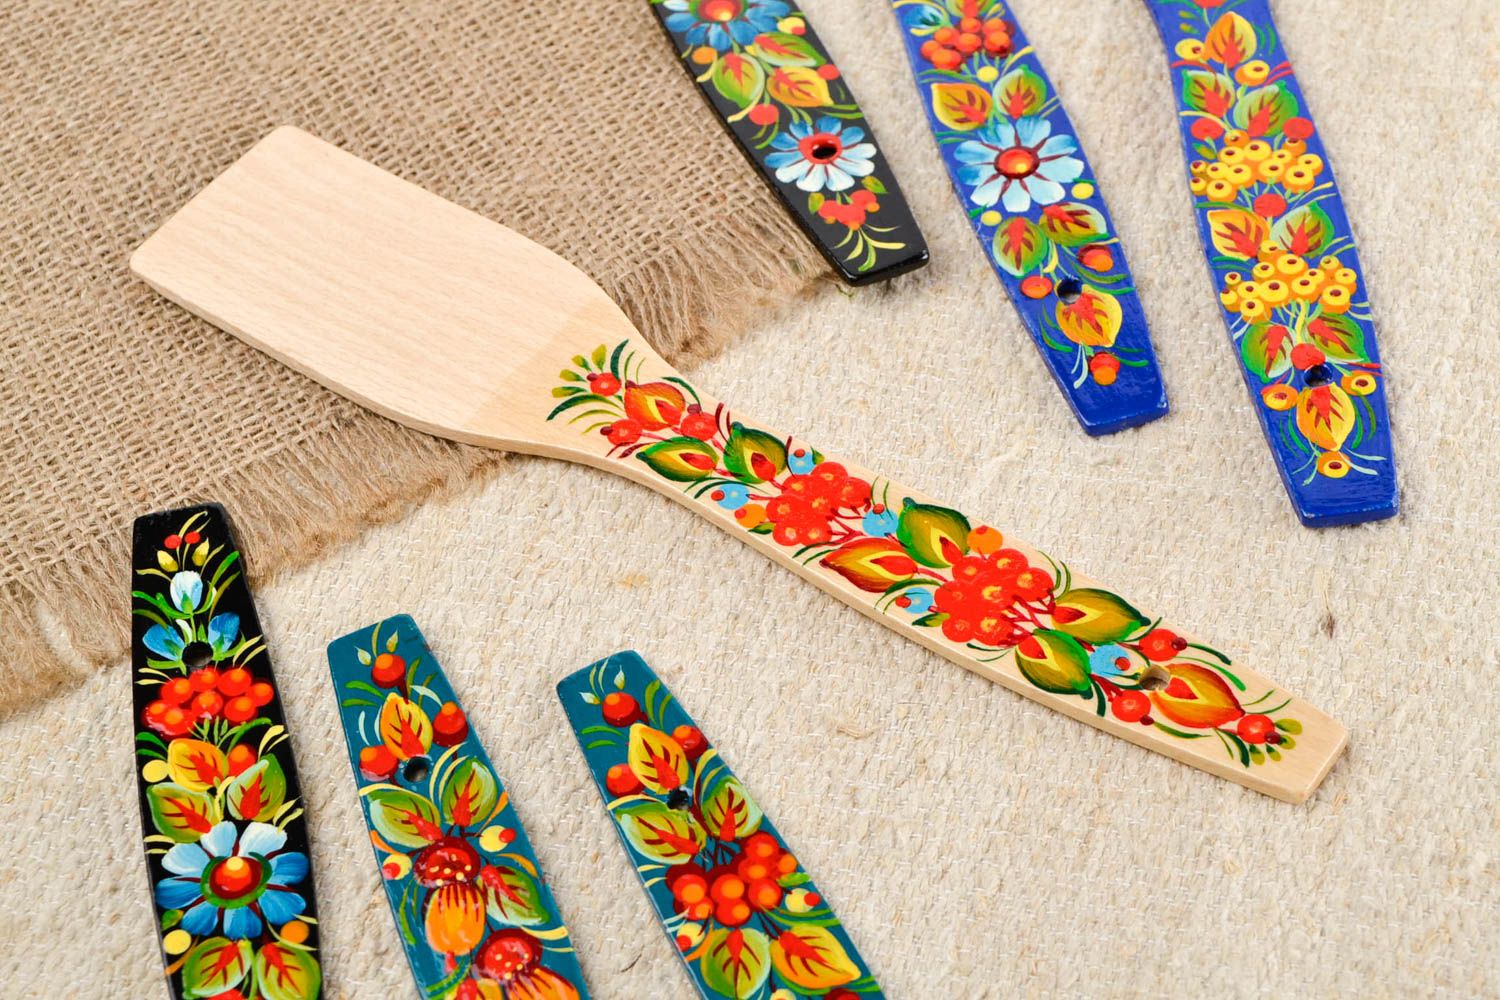 Handmade wooden spatula cooking tools kitchen utensils wood craft ideas photo 1